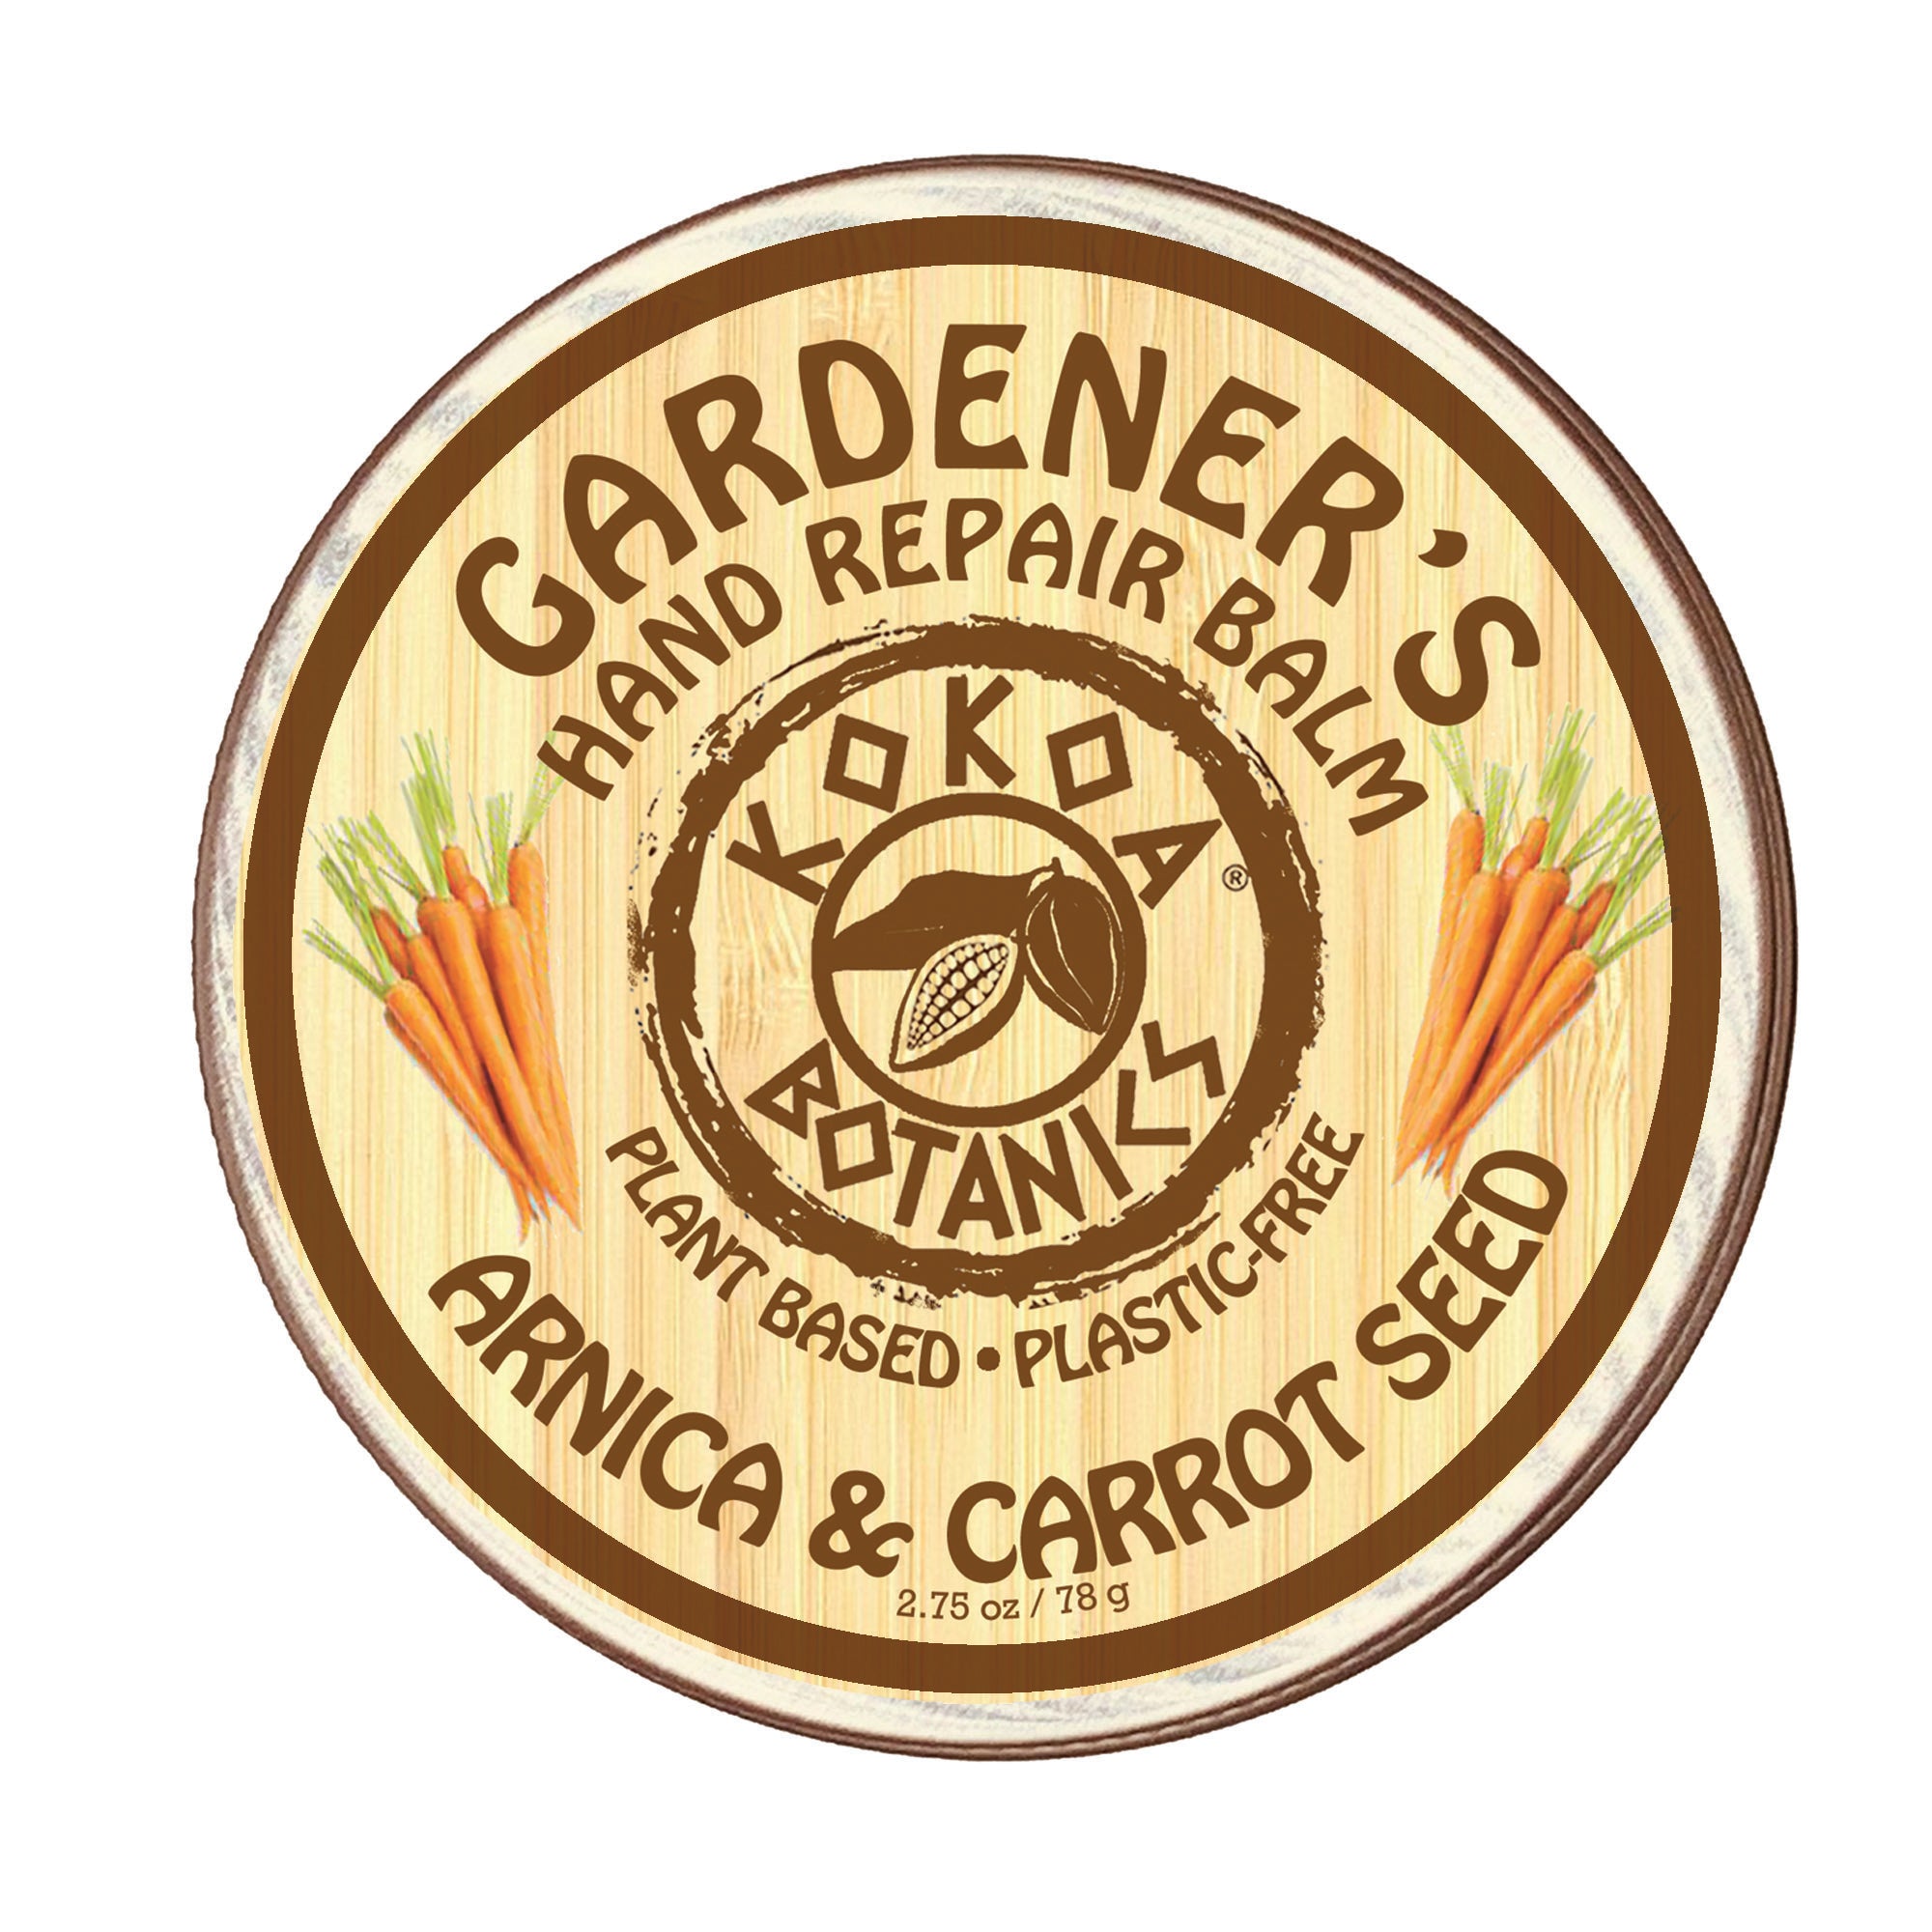 Gardener's Hand Repair Balm - Arnica and Carrot Seed - 2.75 oz